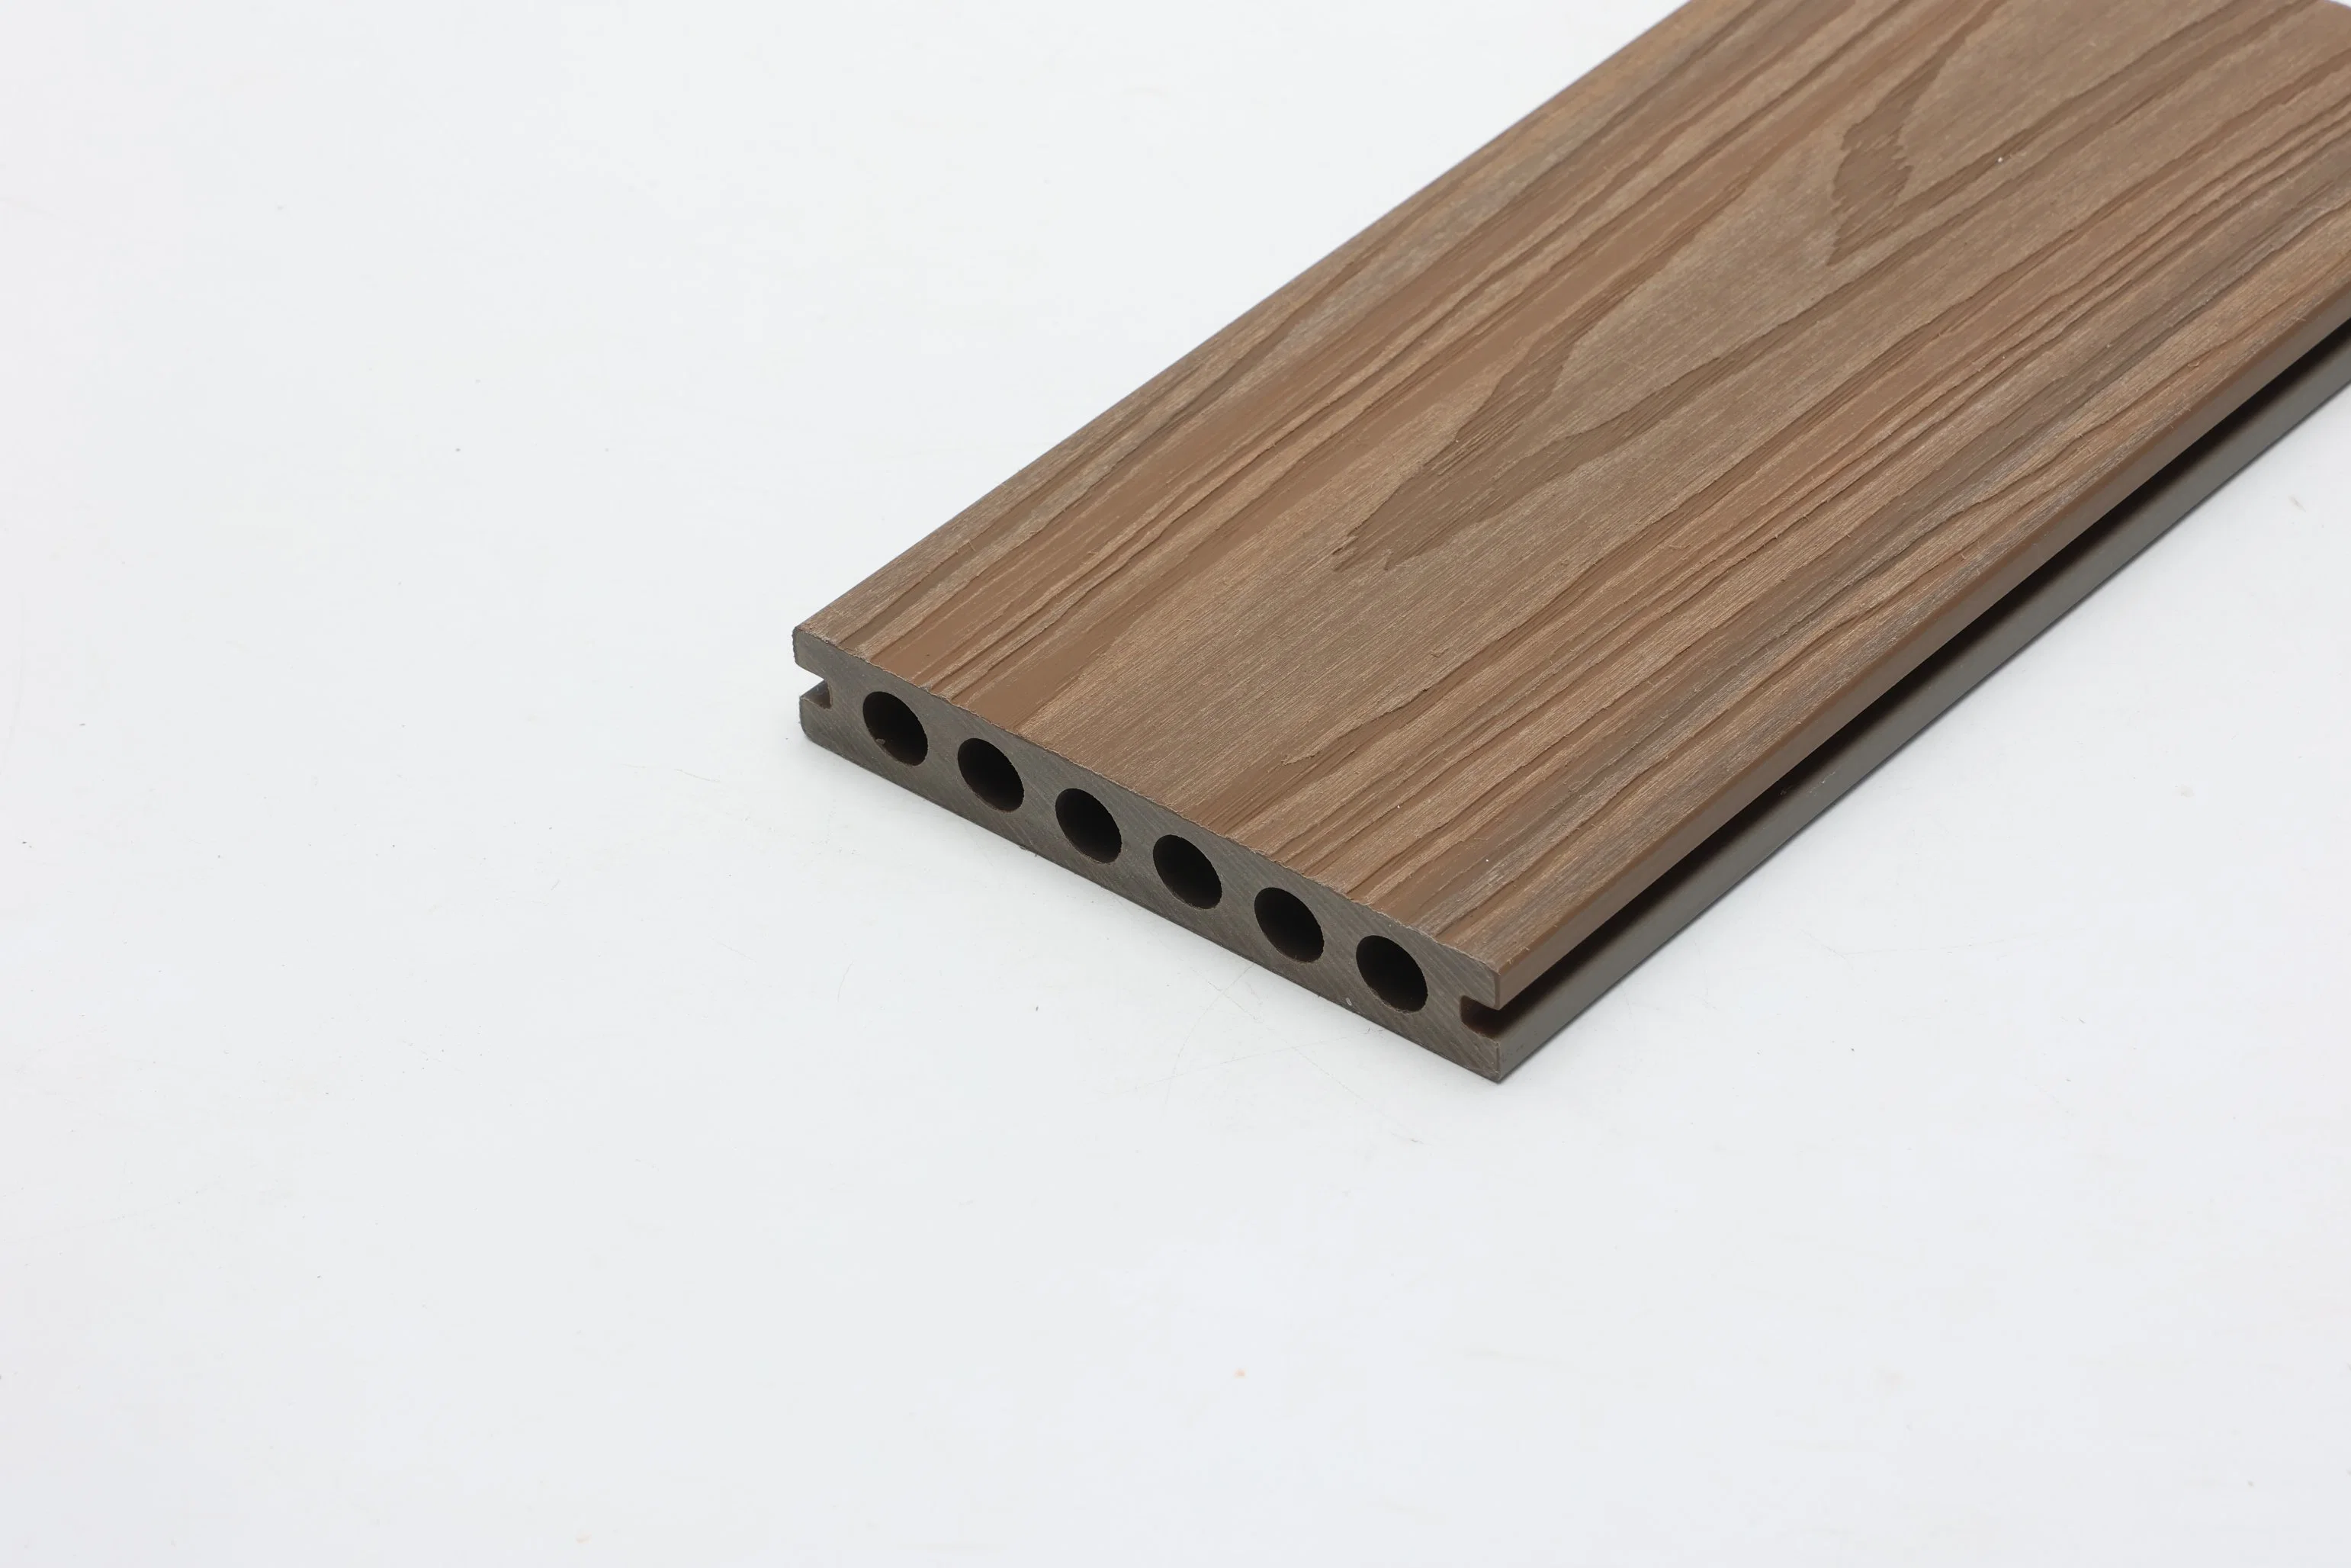 Low Price Waterproof Customized Wood Plastic Composite Flooring Outdoor Decking WPC Board